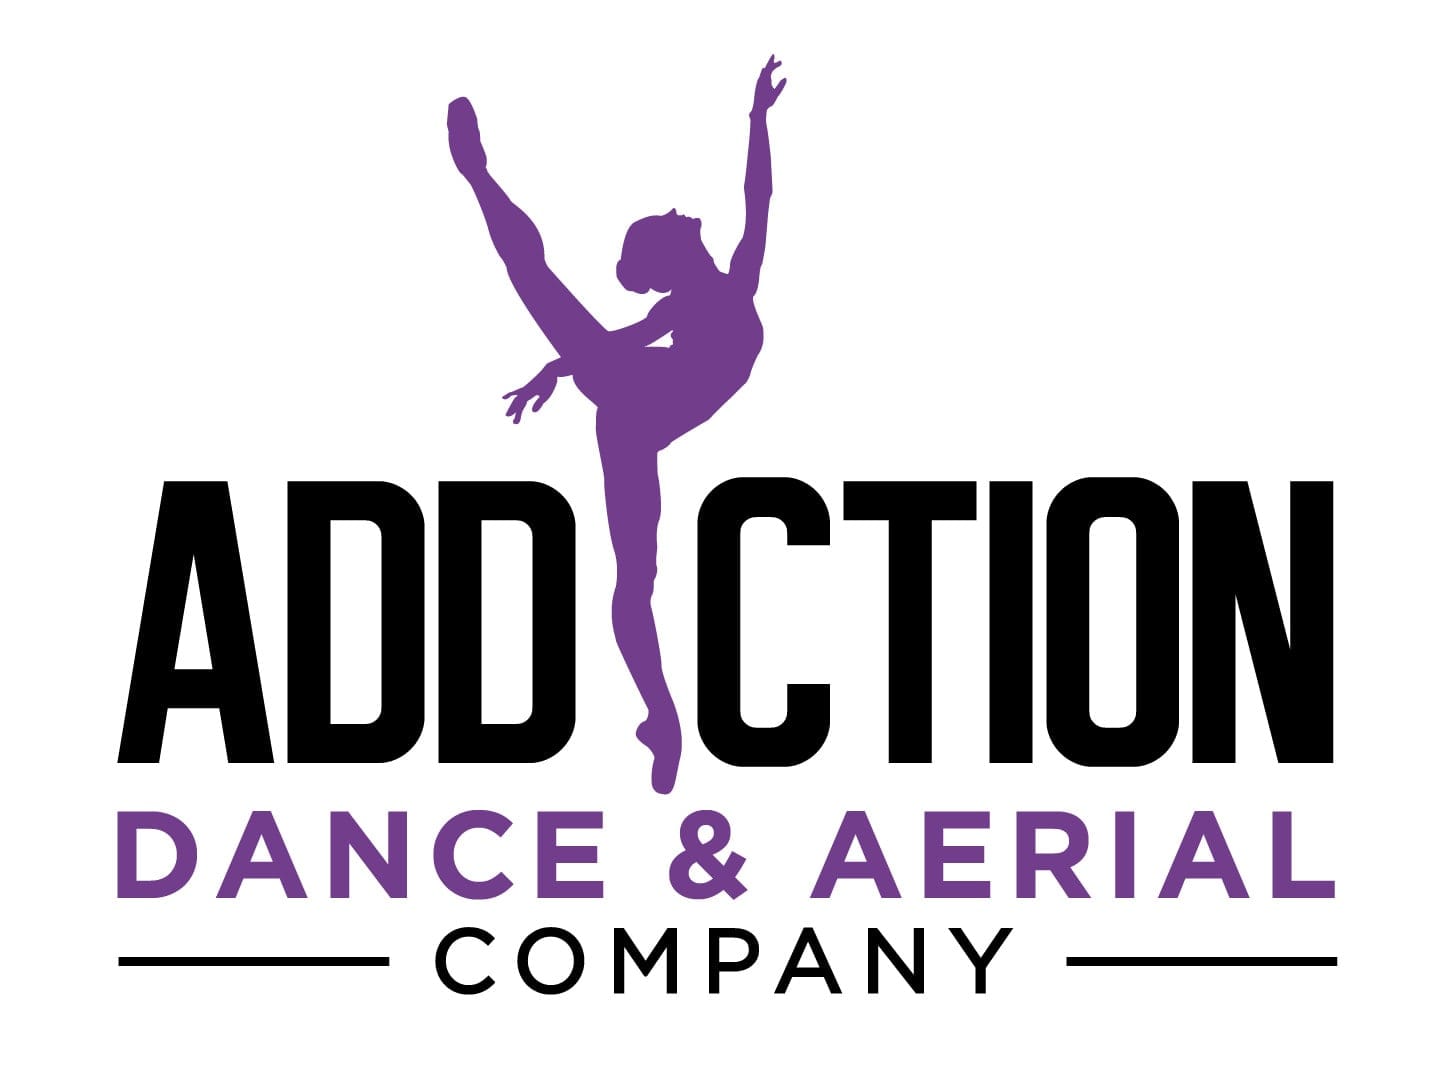 Addiction dance & Aereal company REAL